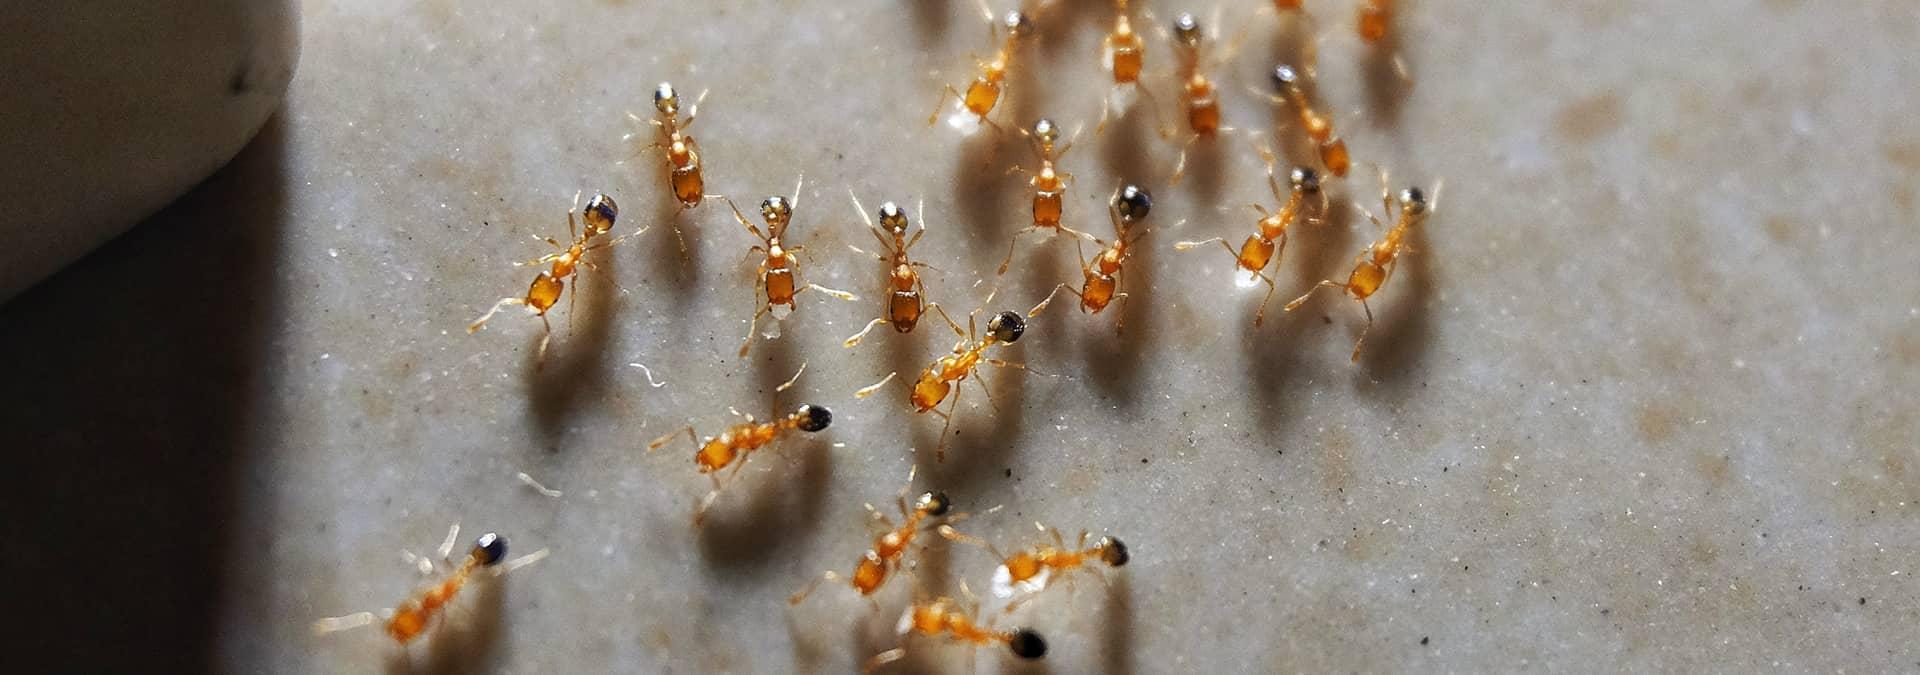 many pharoah ants in a jacksonville florida kitchen